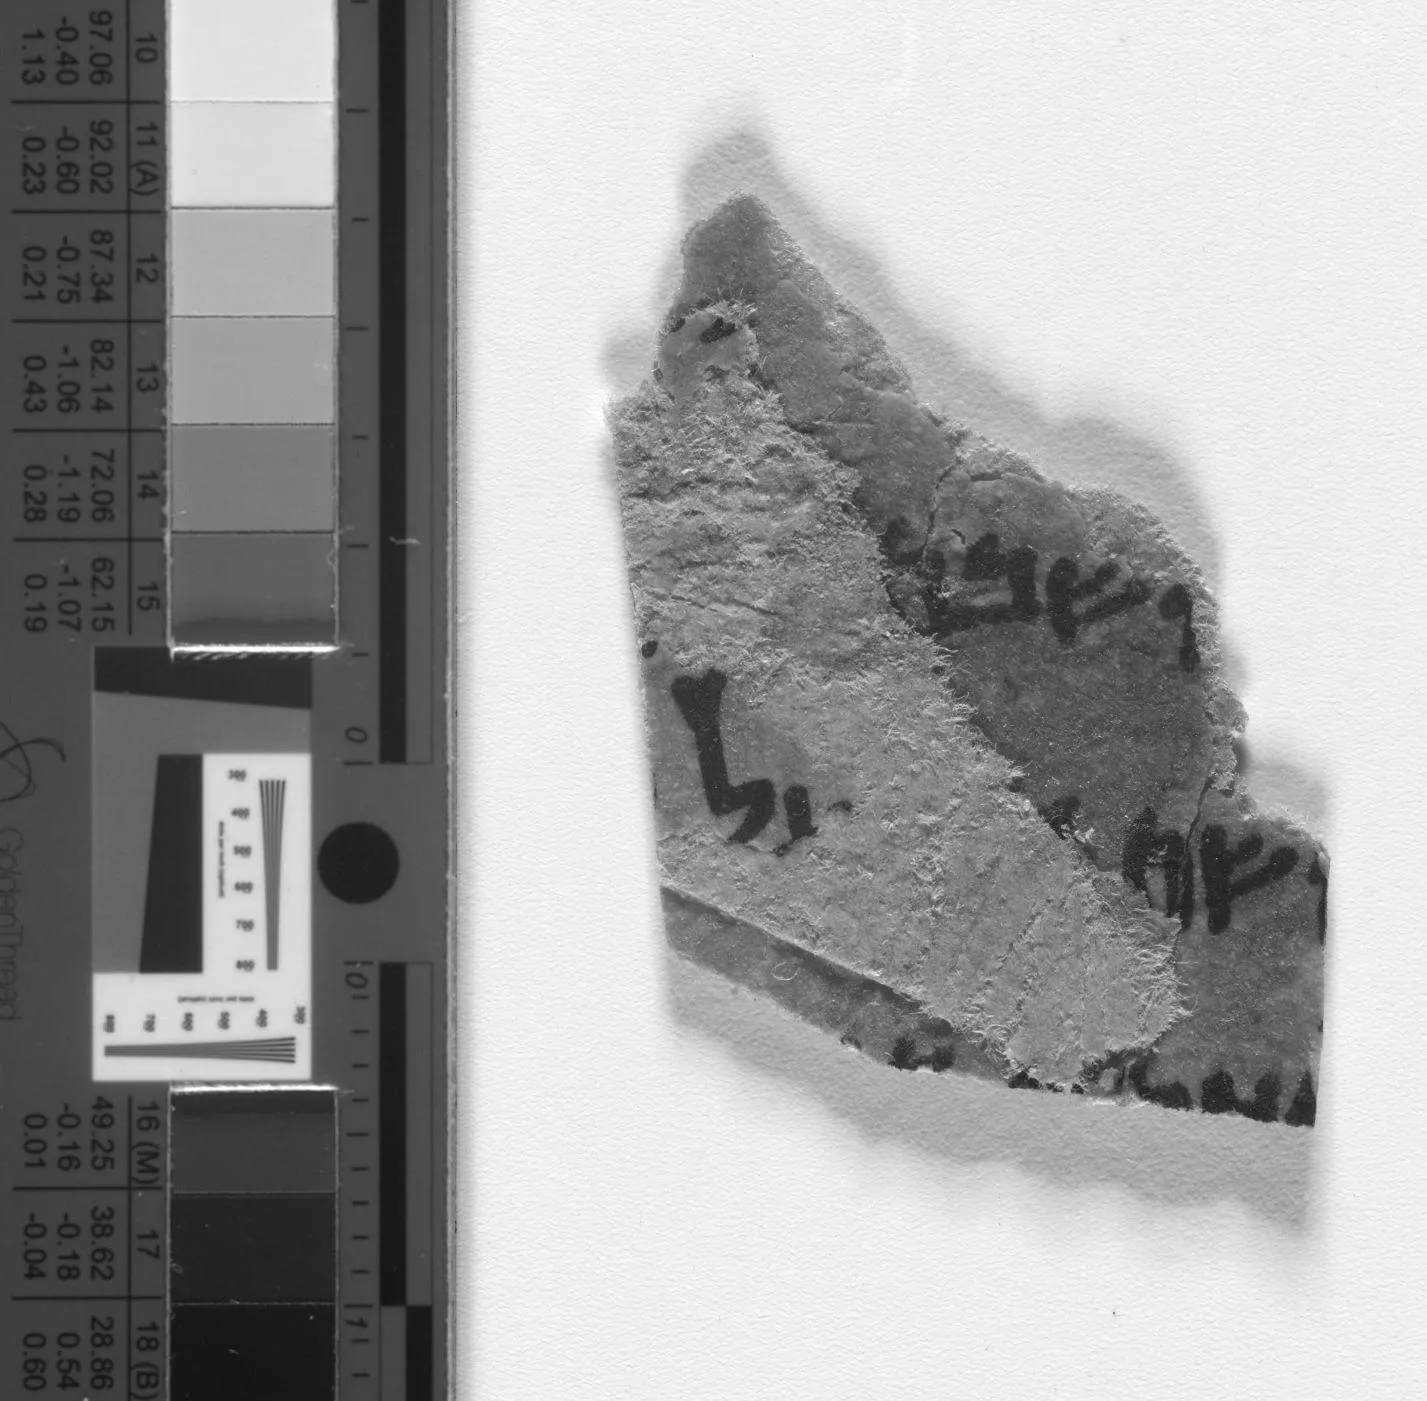 Dead Sea scroll fragment revealing text